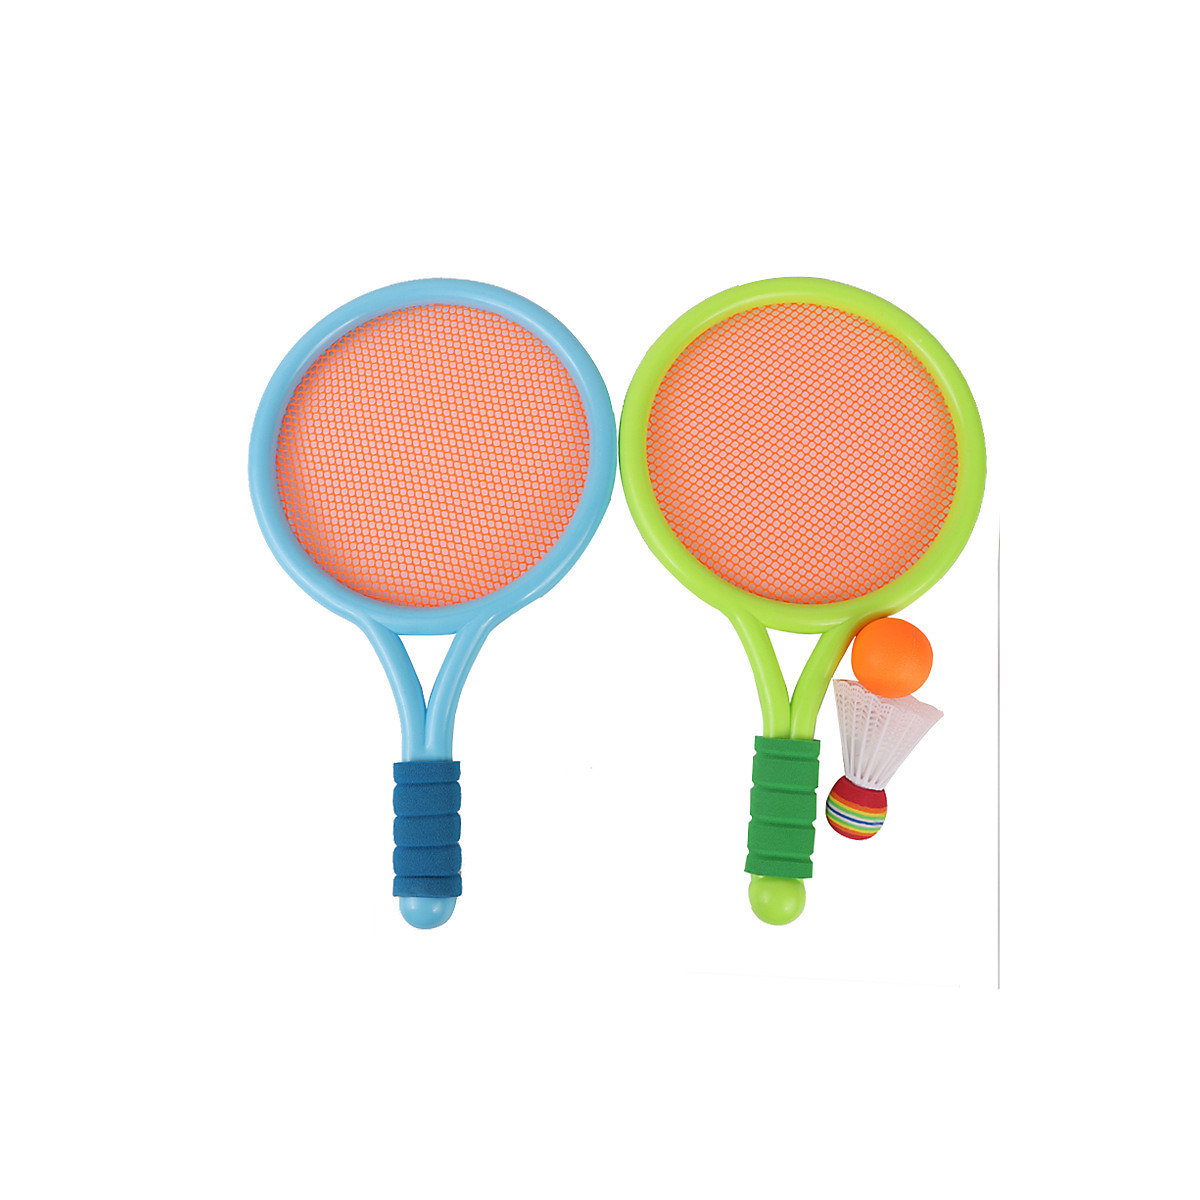 Syntek Sportspielzeug für Kinder Kindersport Badmintonschläger-Set